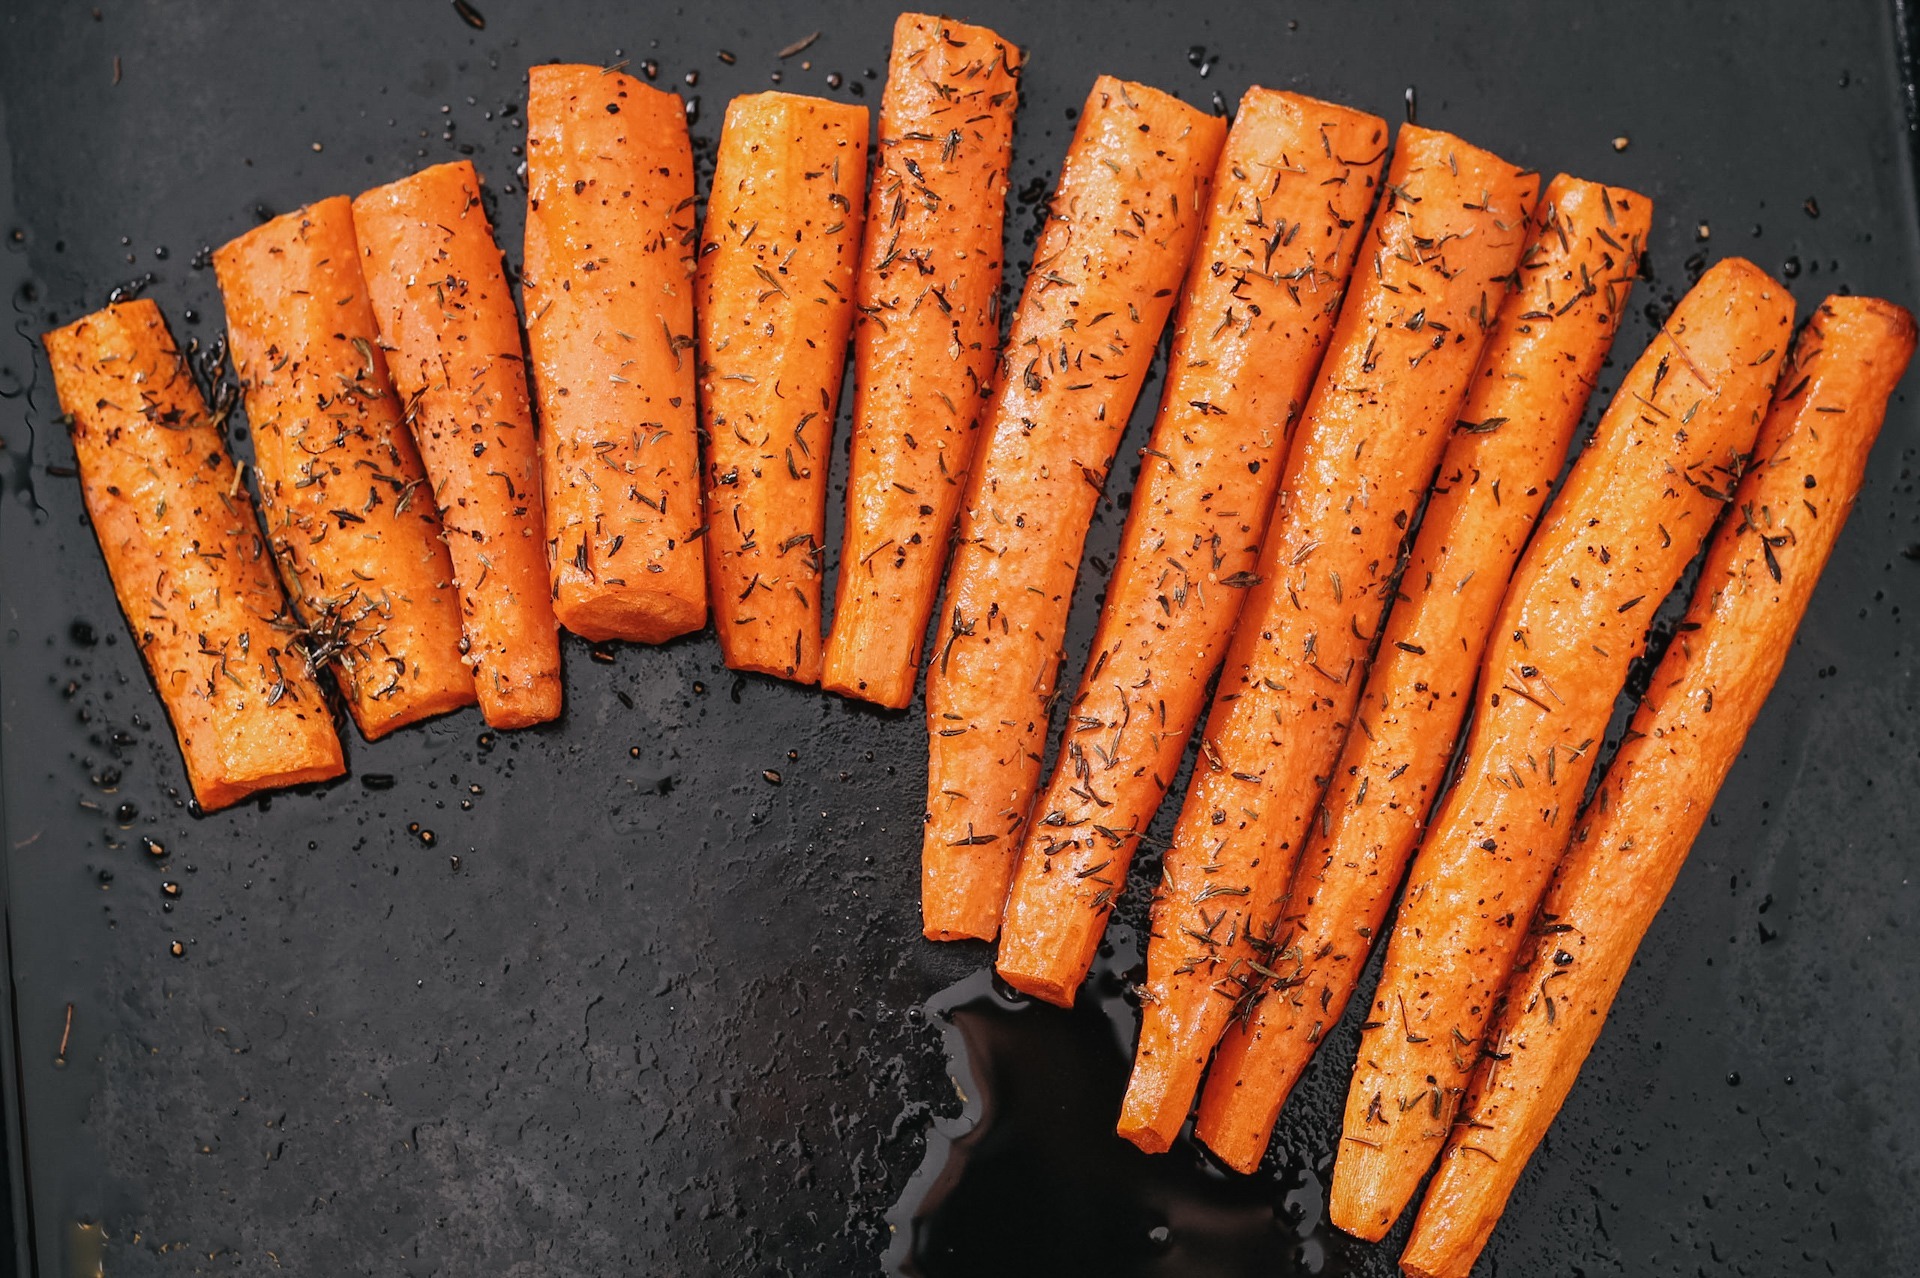 Sweet, crunchy baked carrot